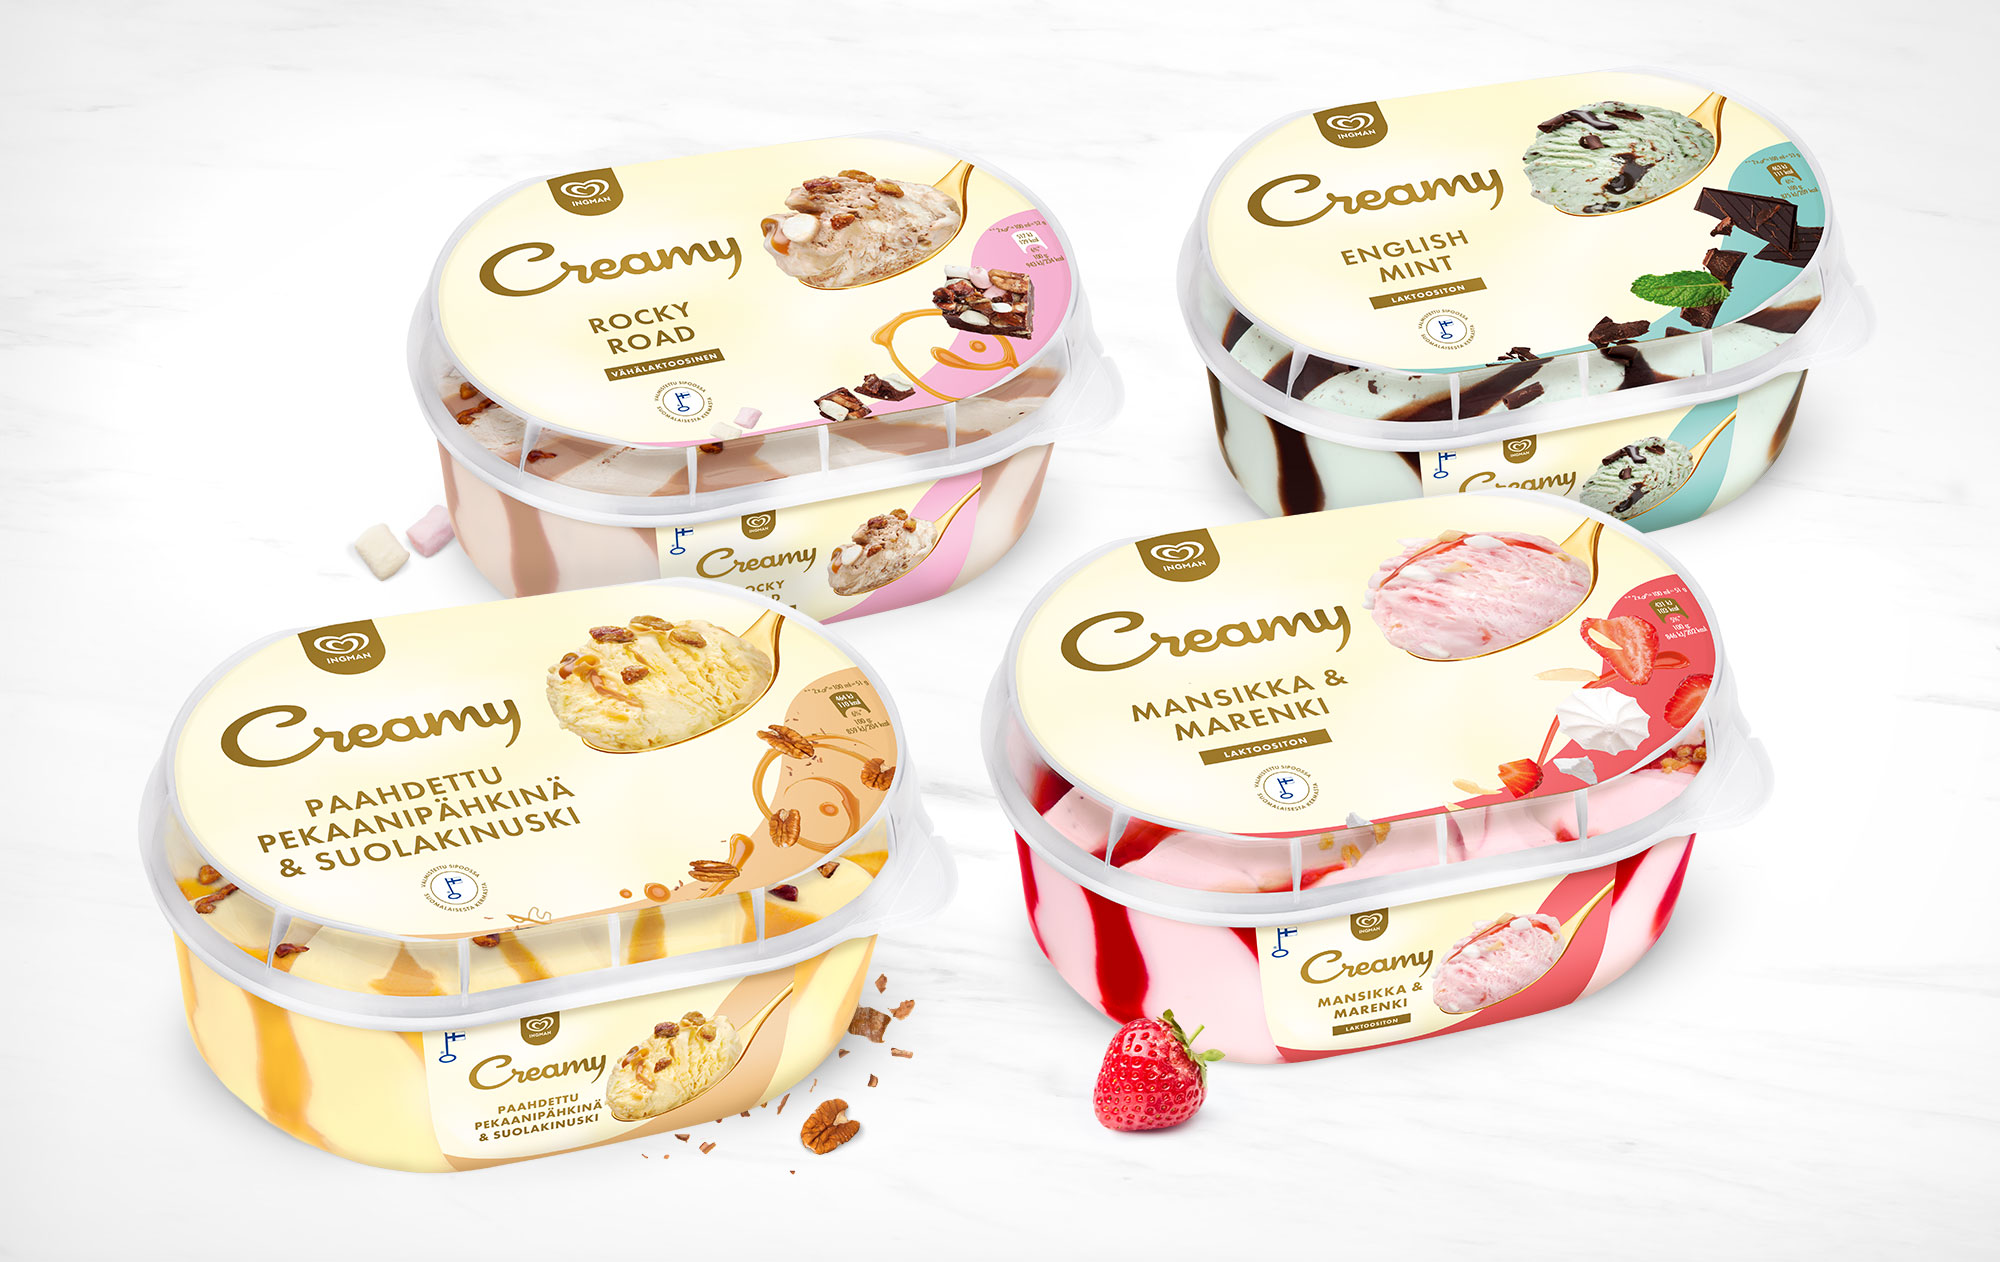 Case Ingman Creamy ice cream mockup images